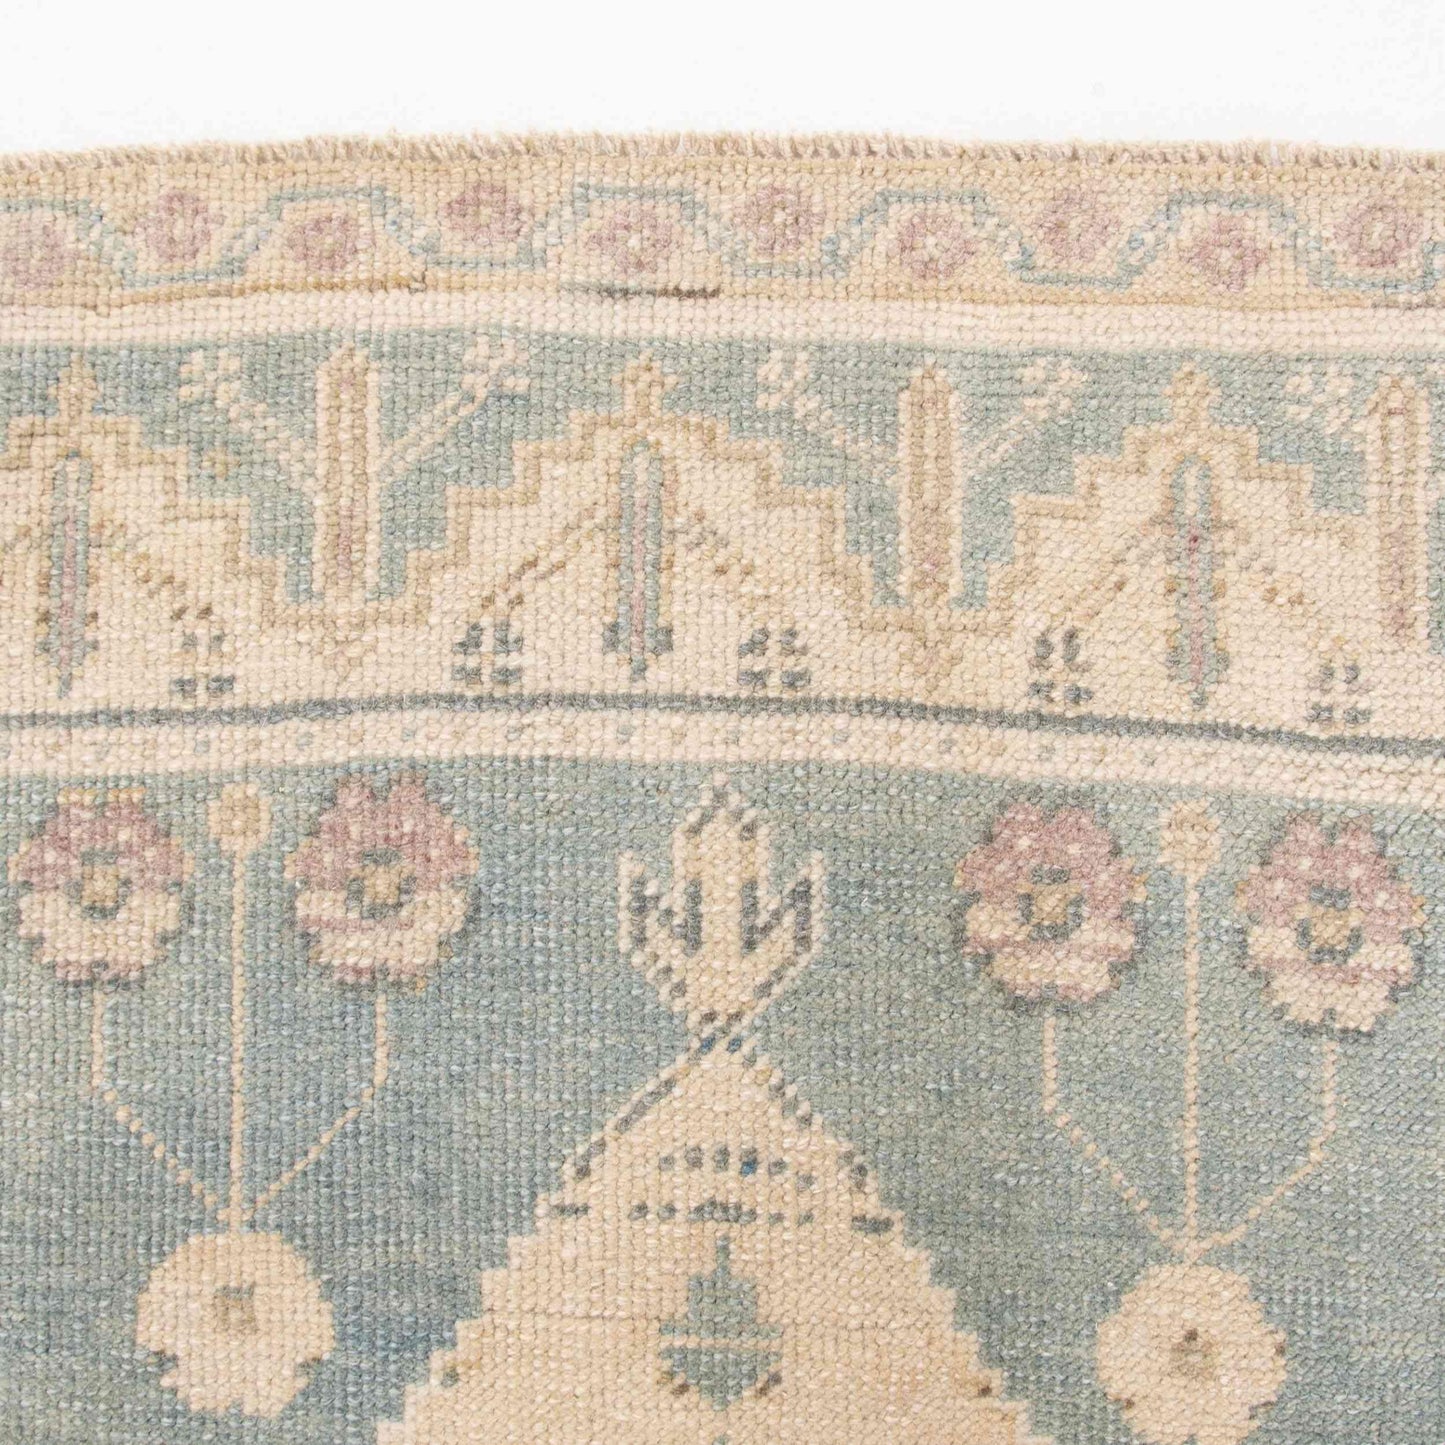 Oriental Rug Anatolian Handwoven Wool On Wool 56 x 120 Cm - 1' 11'' x 4' Sand C007 ER01